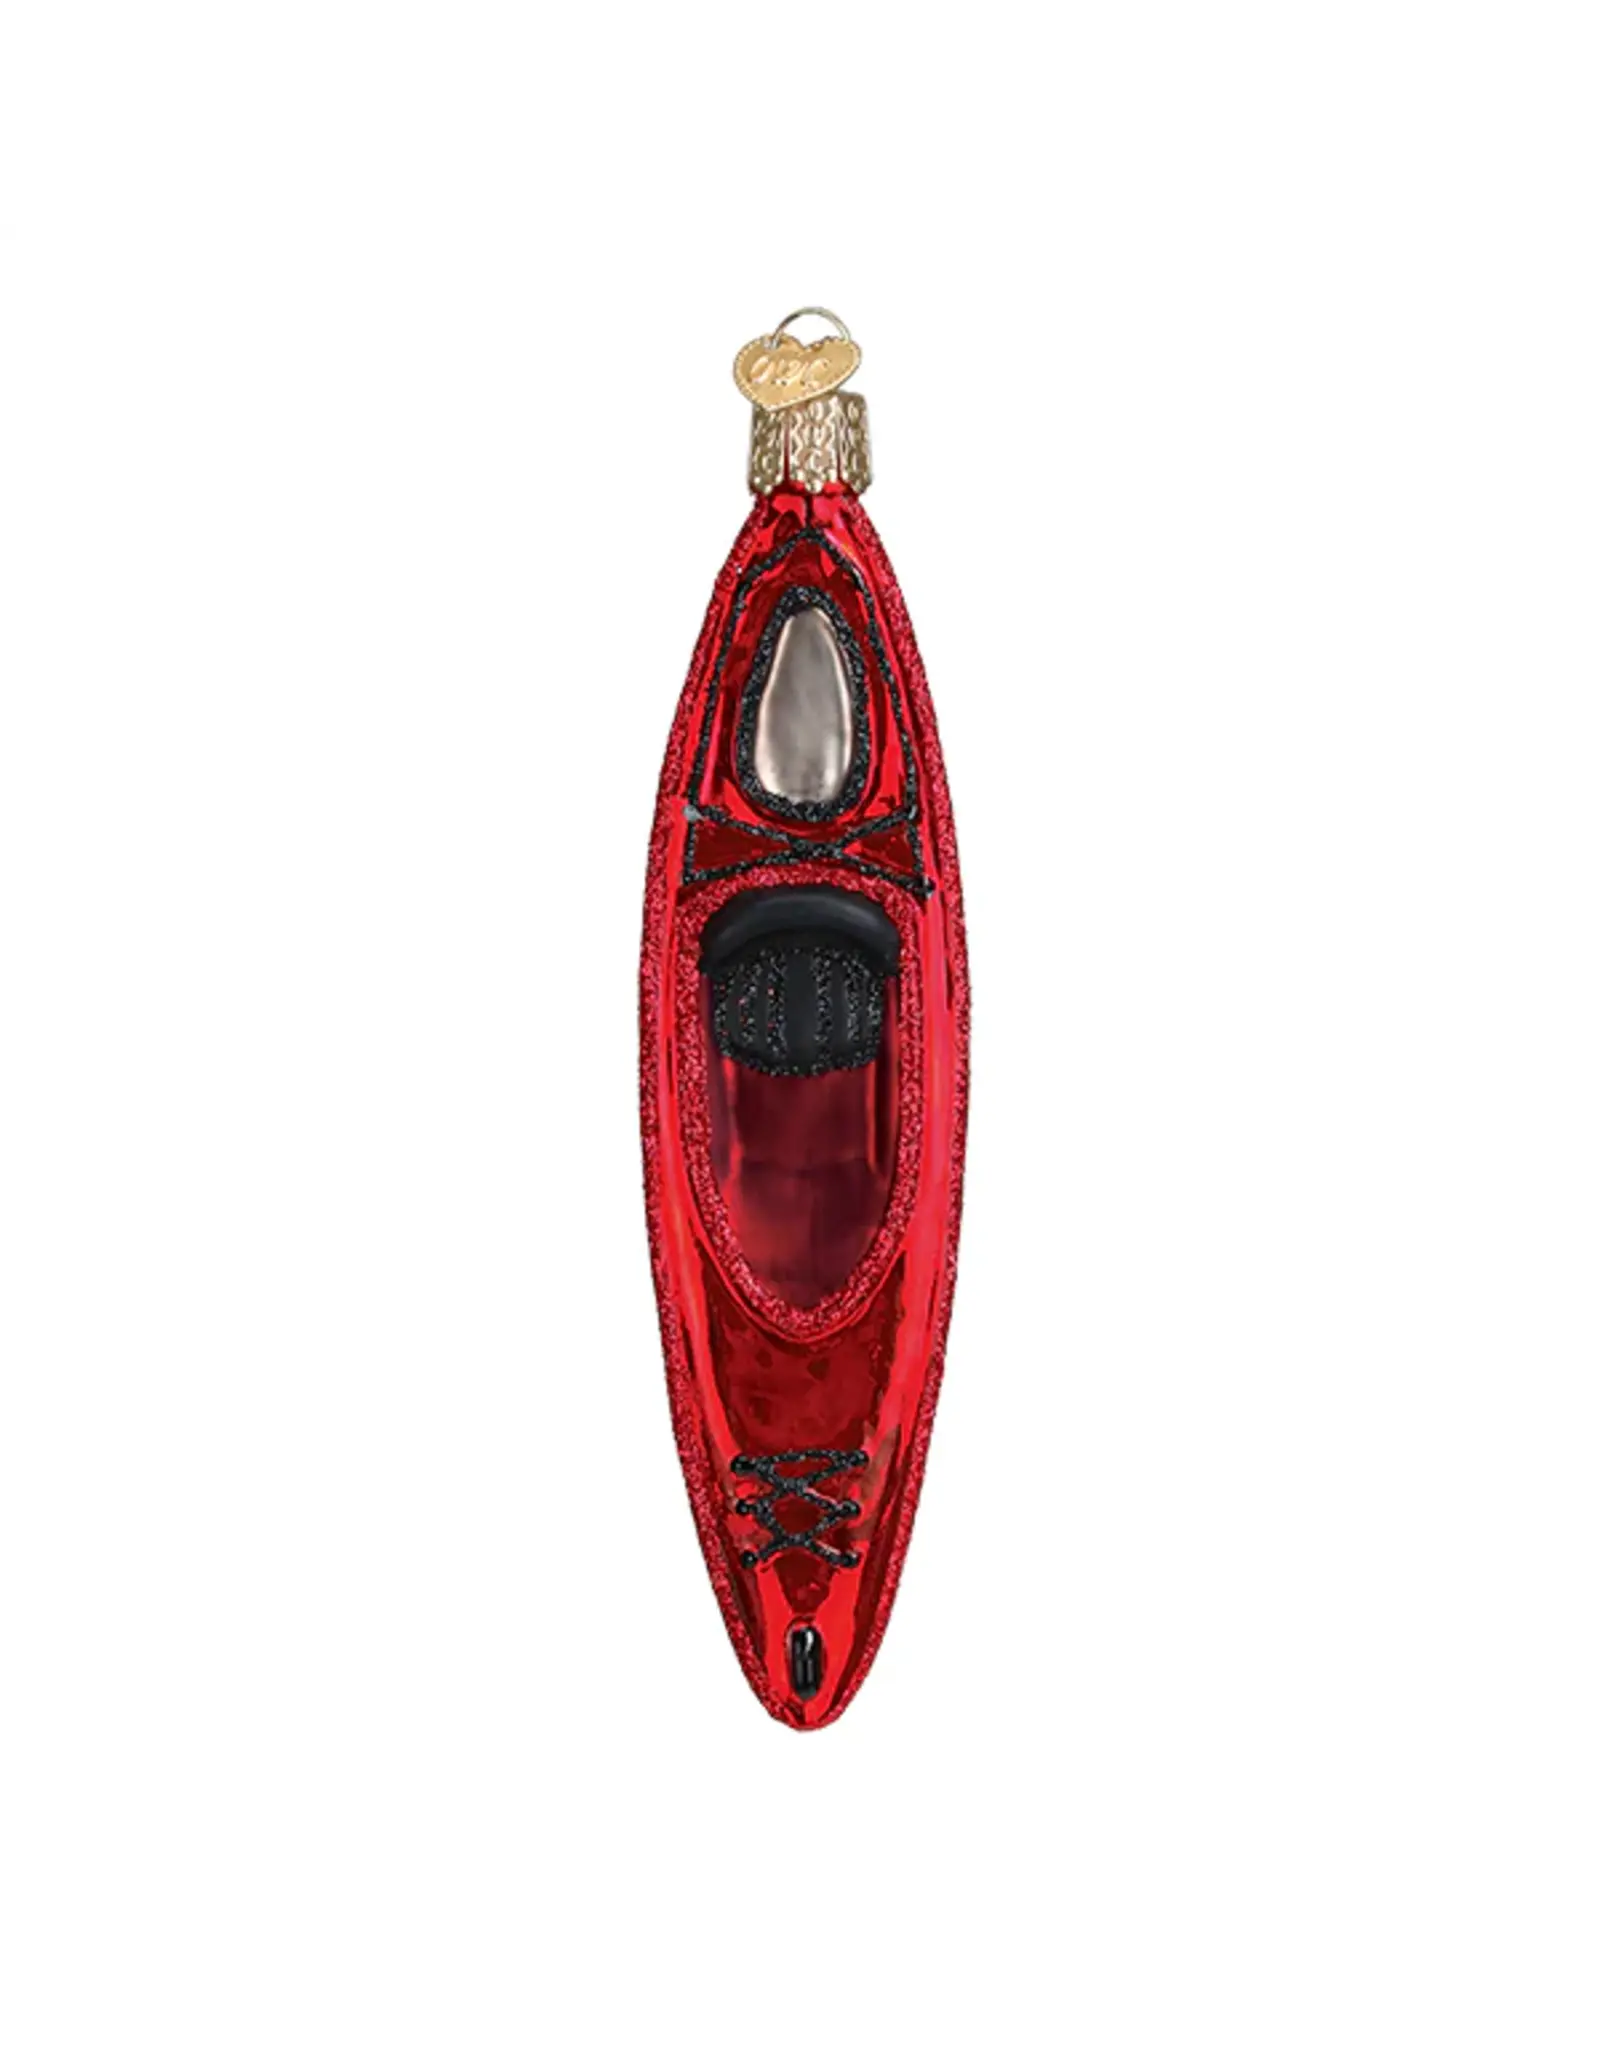 Old World Christmas Red Kayak Ornament